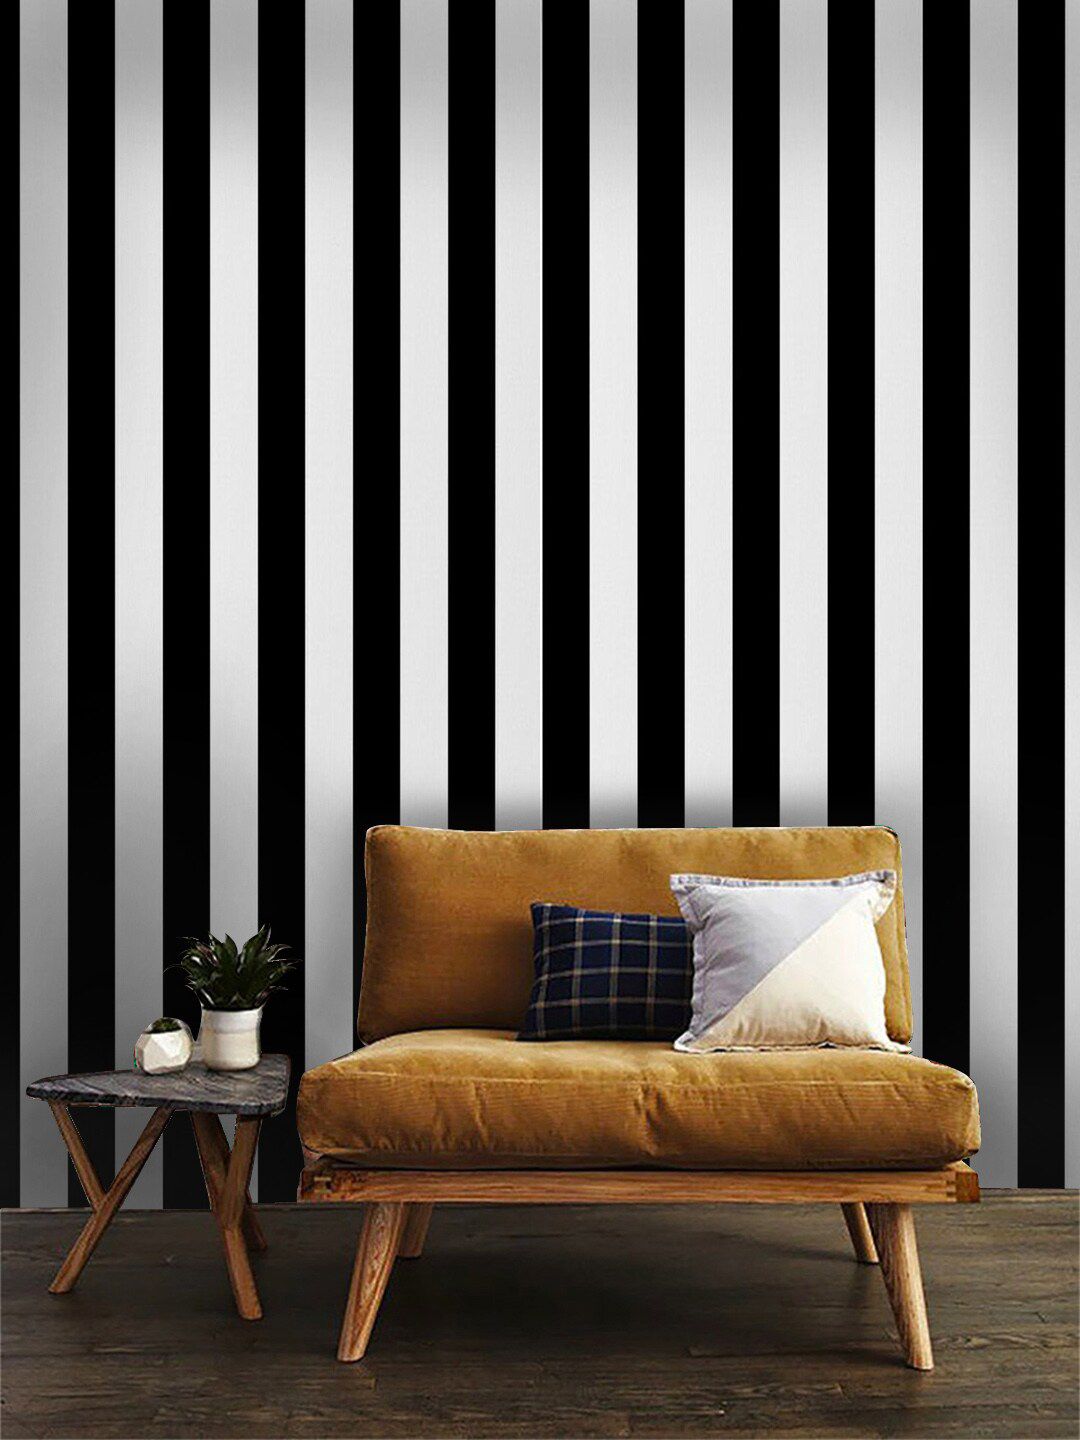 Jaamso Royals White & Black Striped Self-Adhesive & Waterproof Wallpaper Price in India